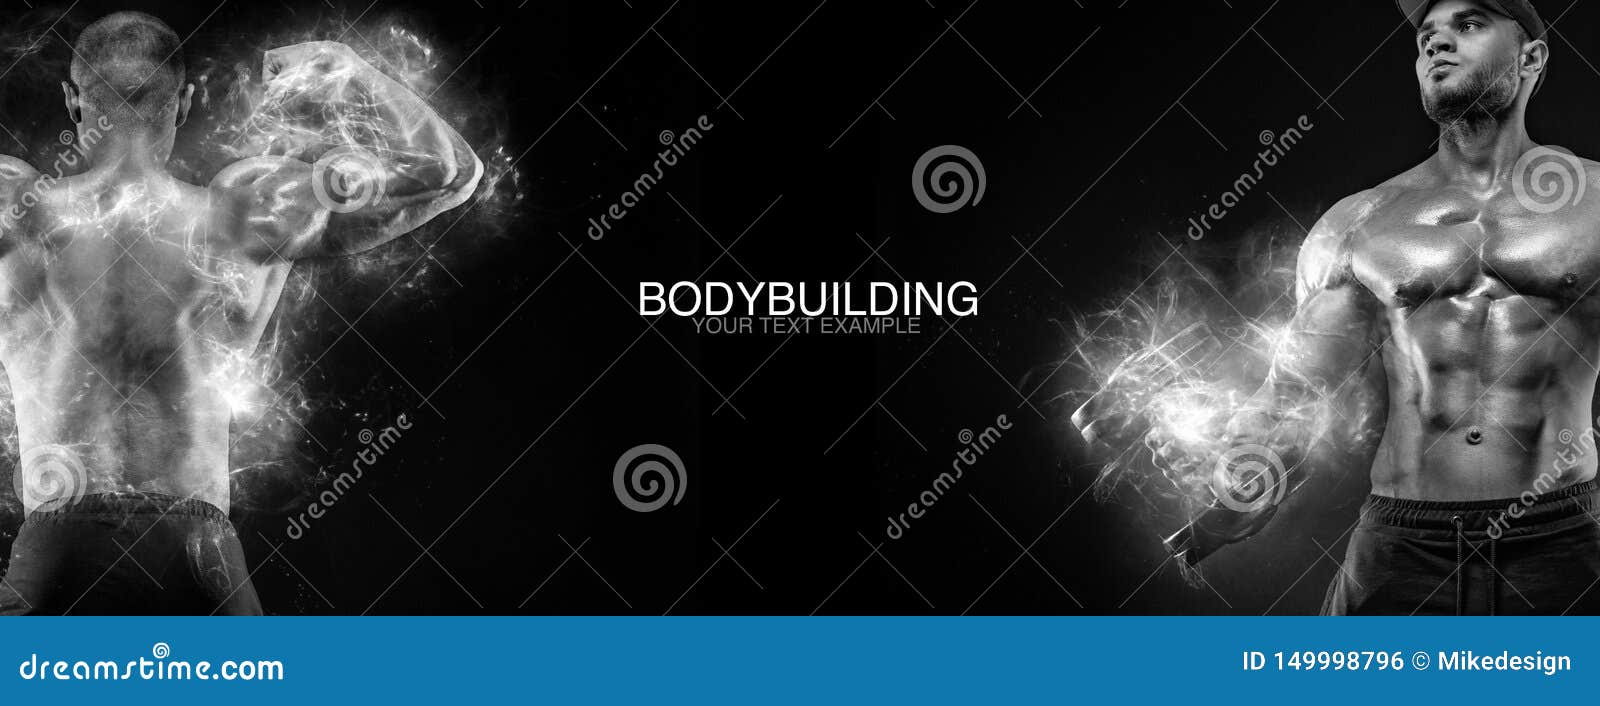 Wallpaper Of Body Builder (60+ images)